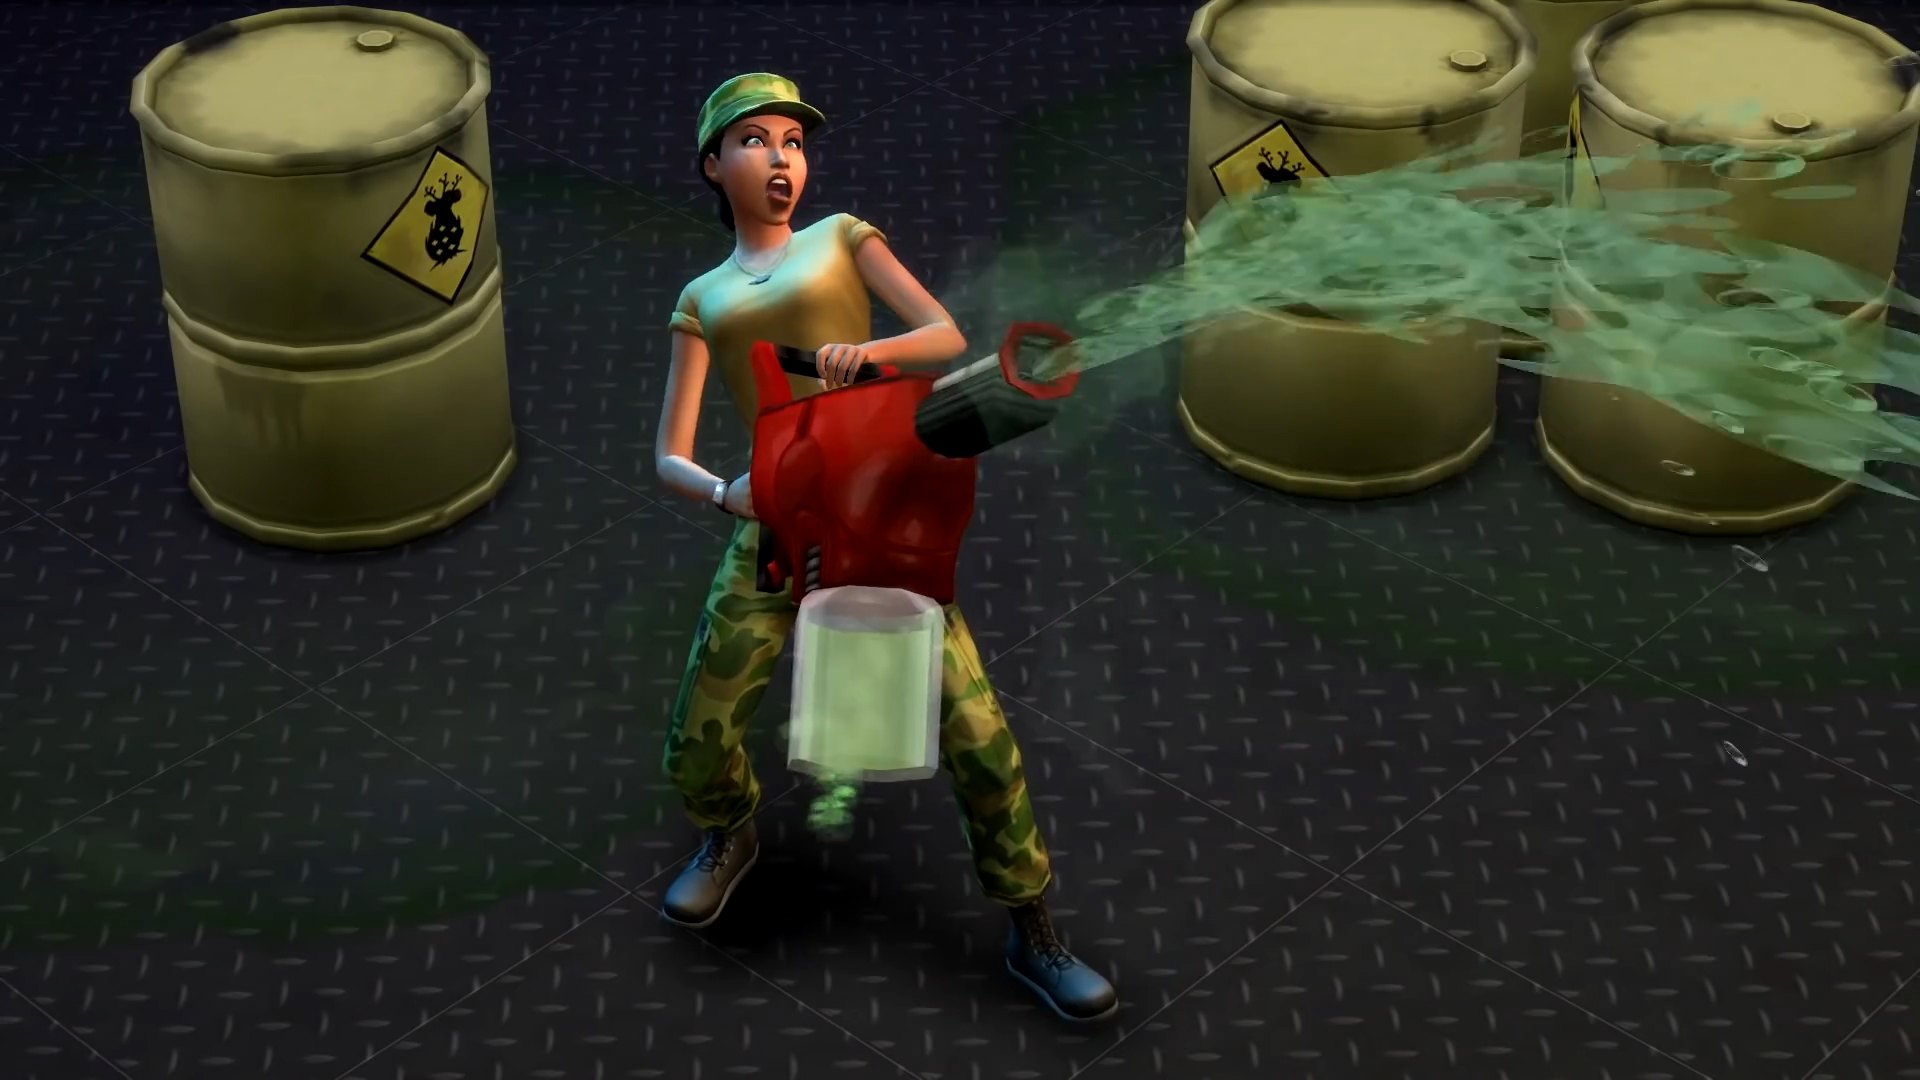 The Sims 4 Strangerville - Military equipment